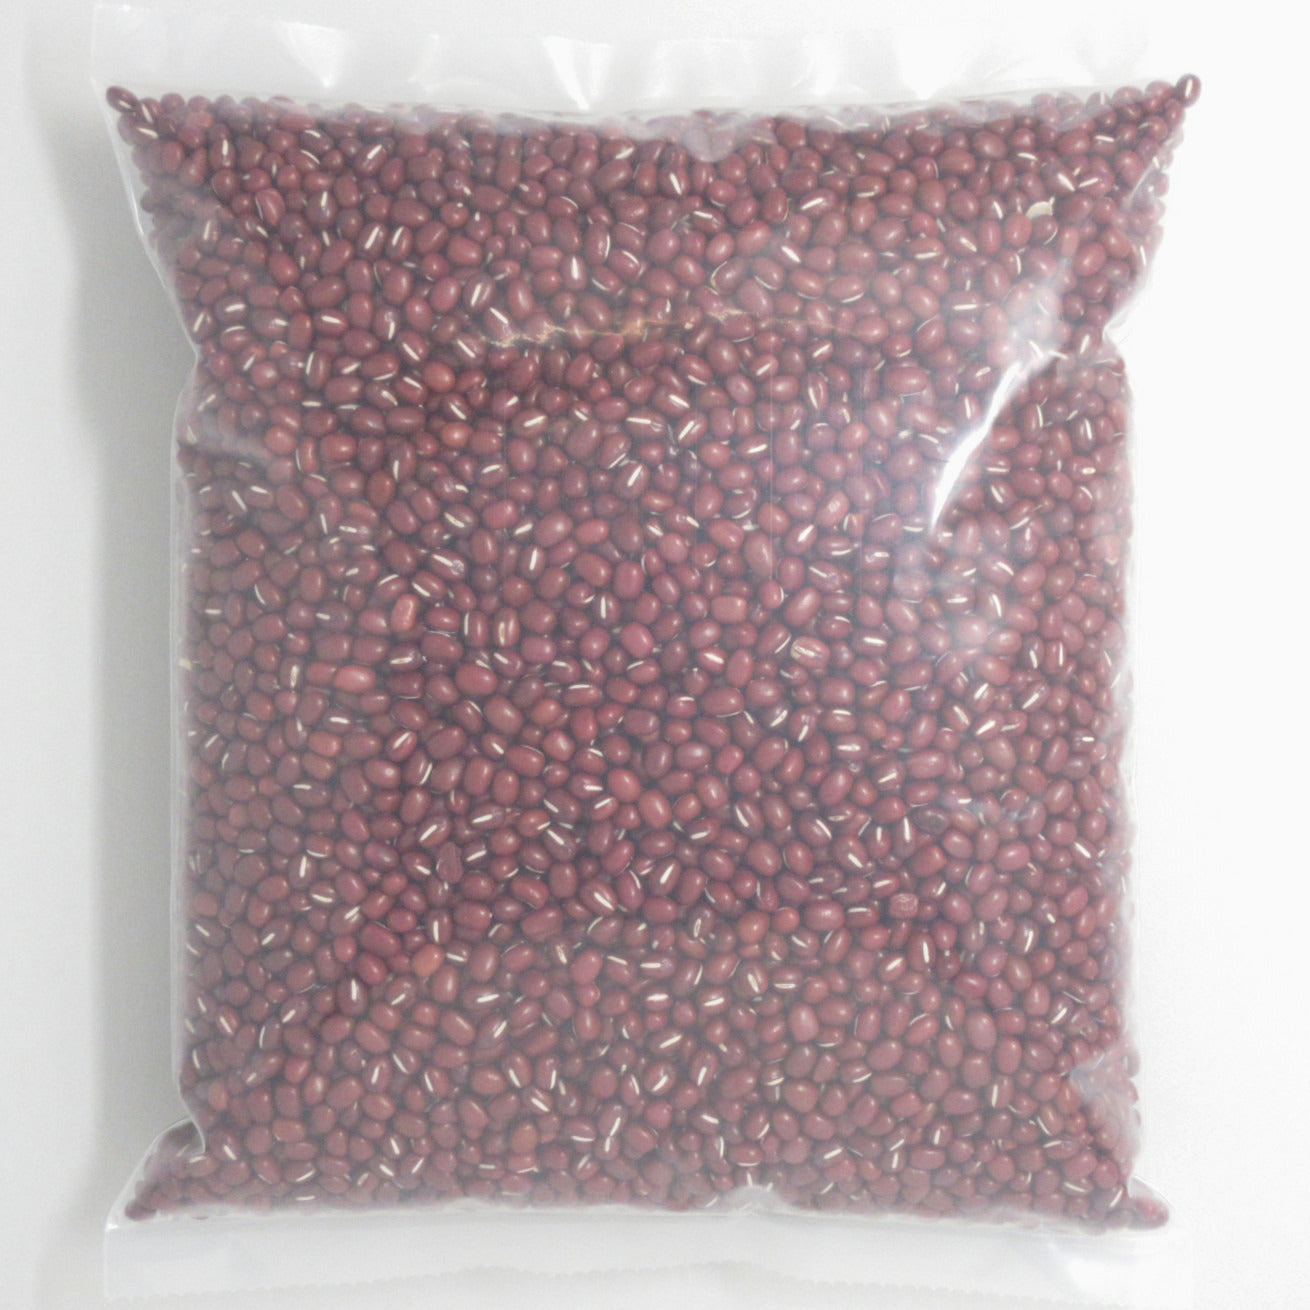 Flour Barrel product image - Adzuki Beans